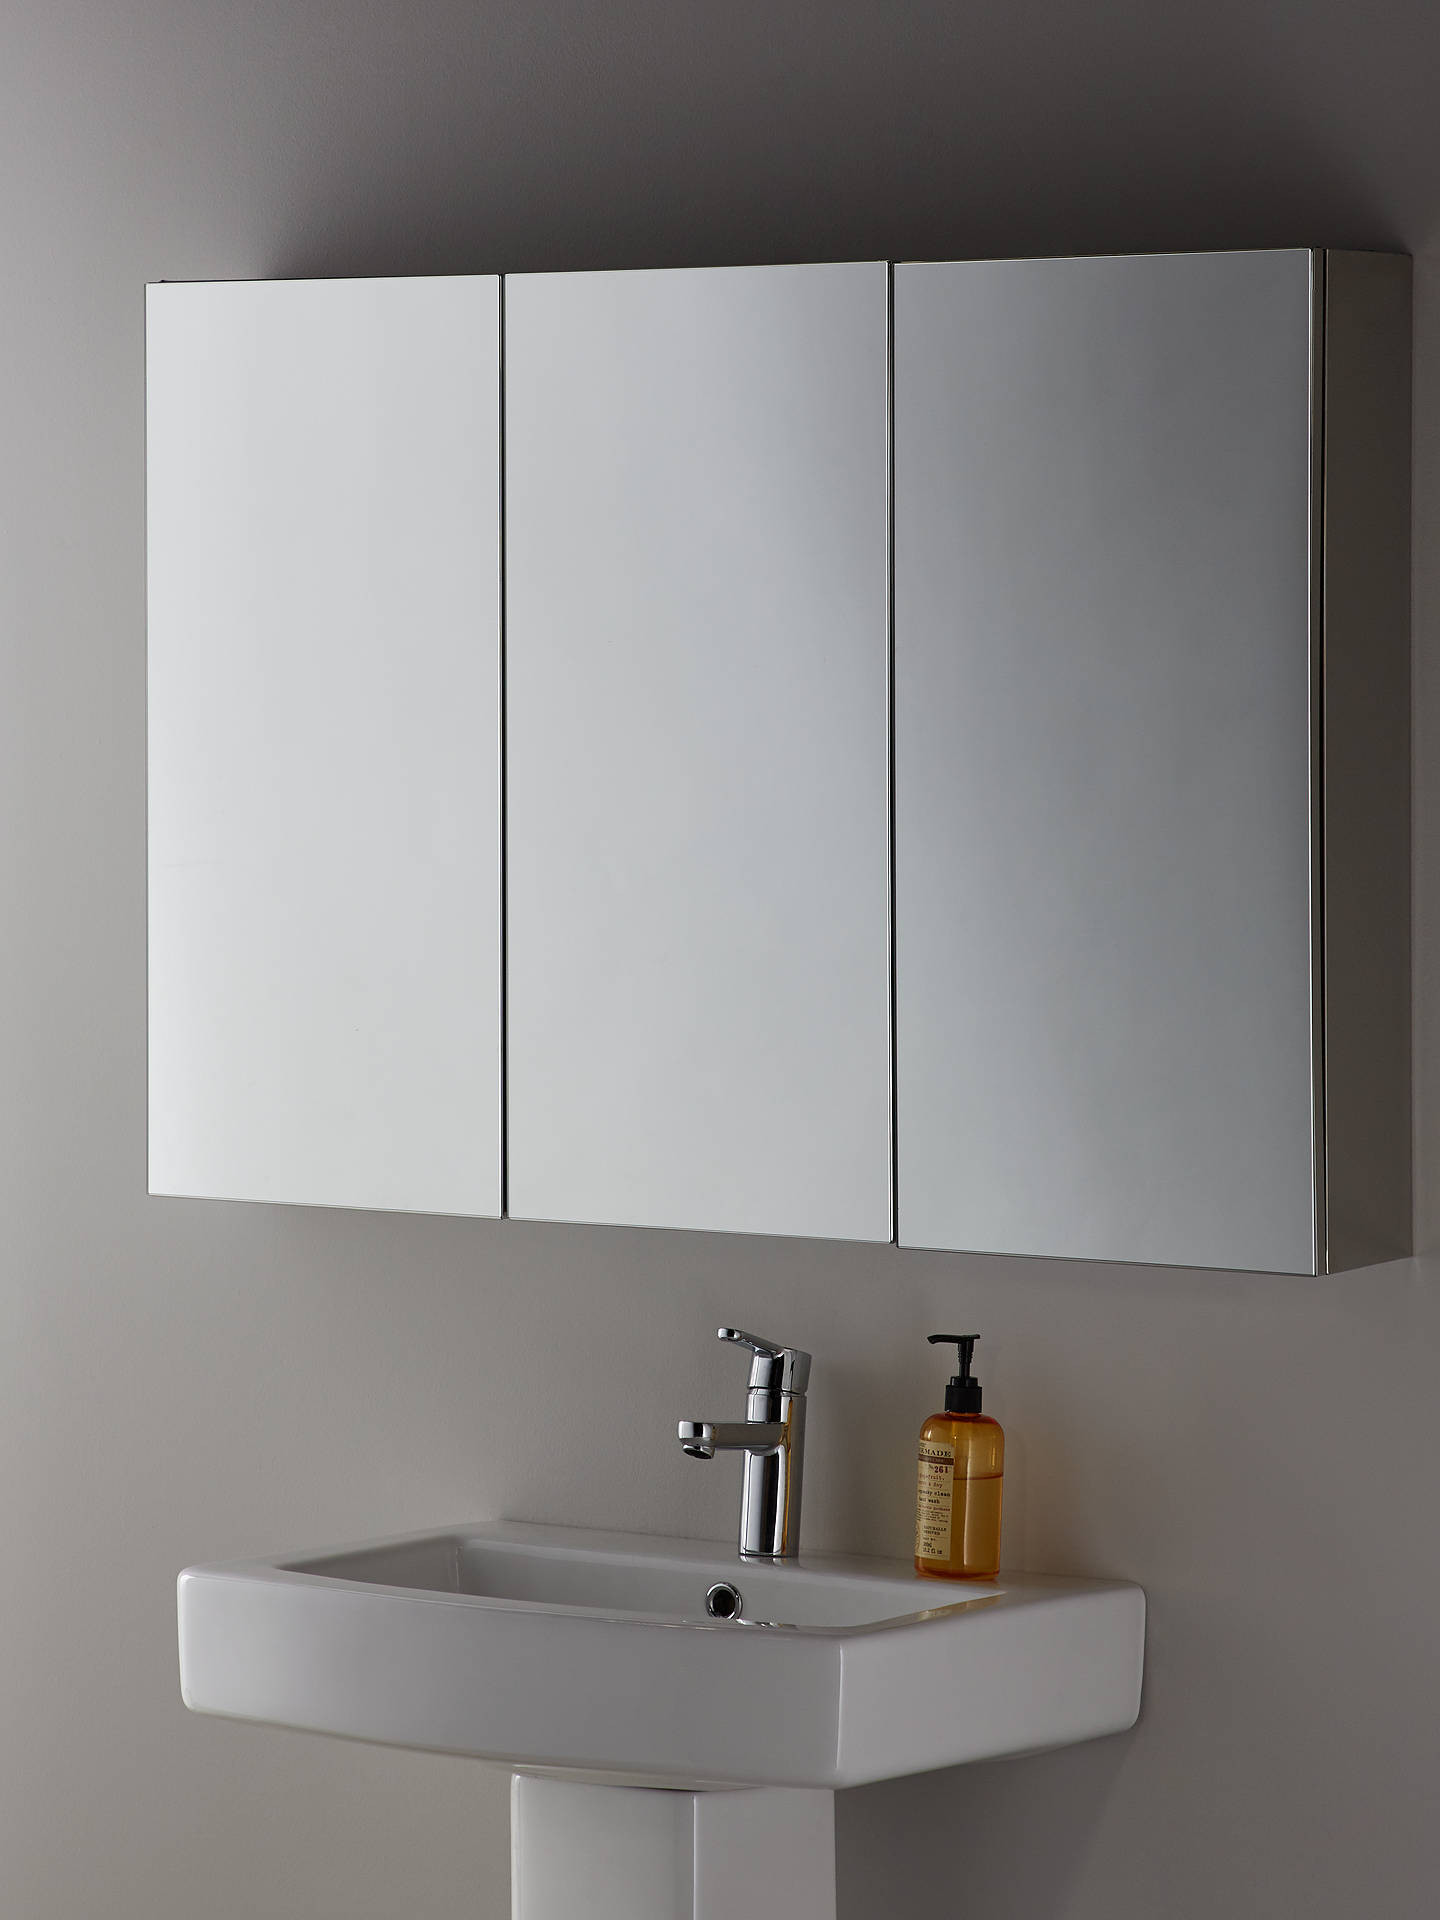 Mirror Bathroom Cabinet
 John Lewis & Partners Triple Mirrored Bathroom Cabinet